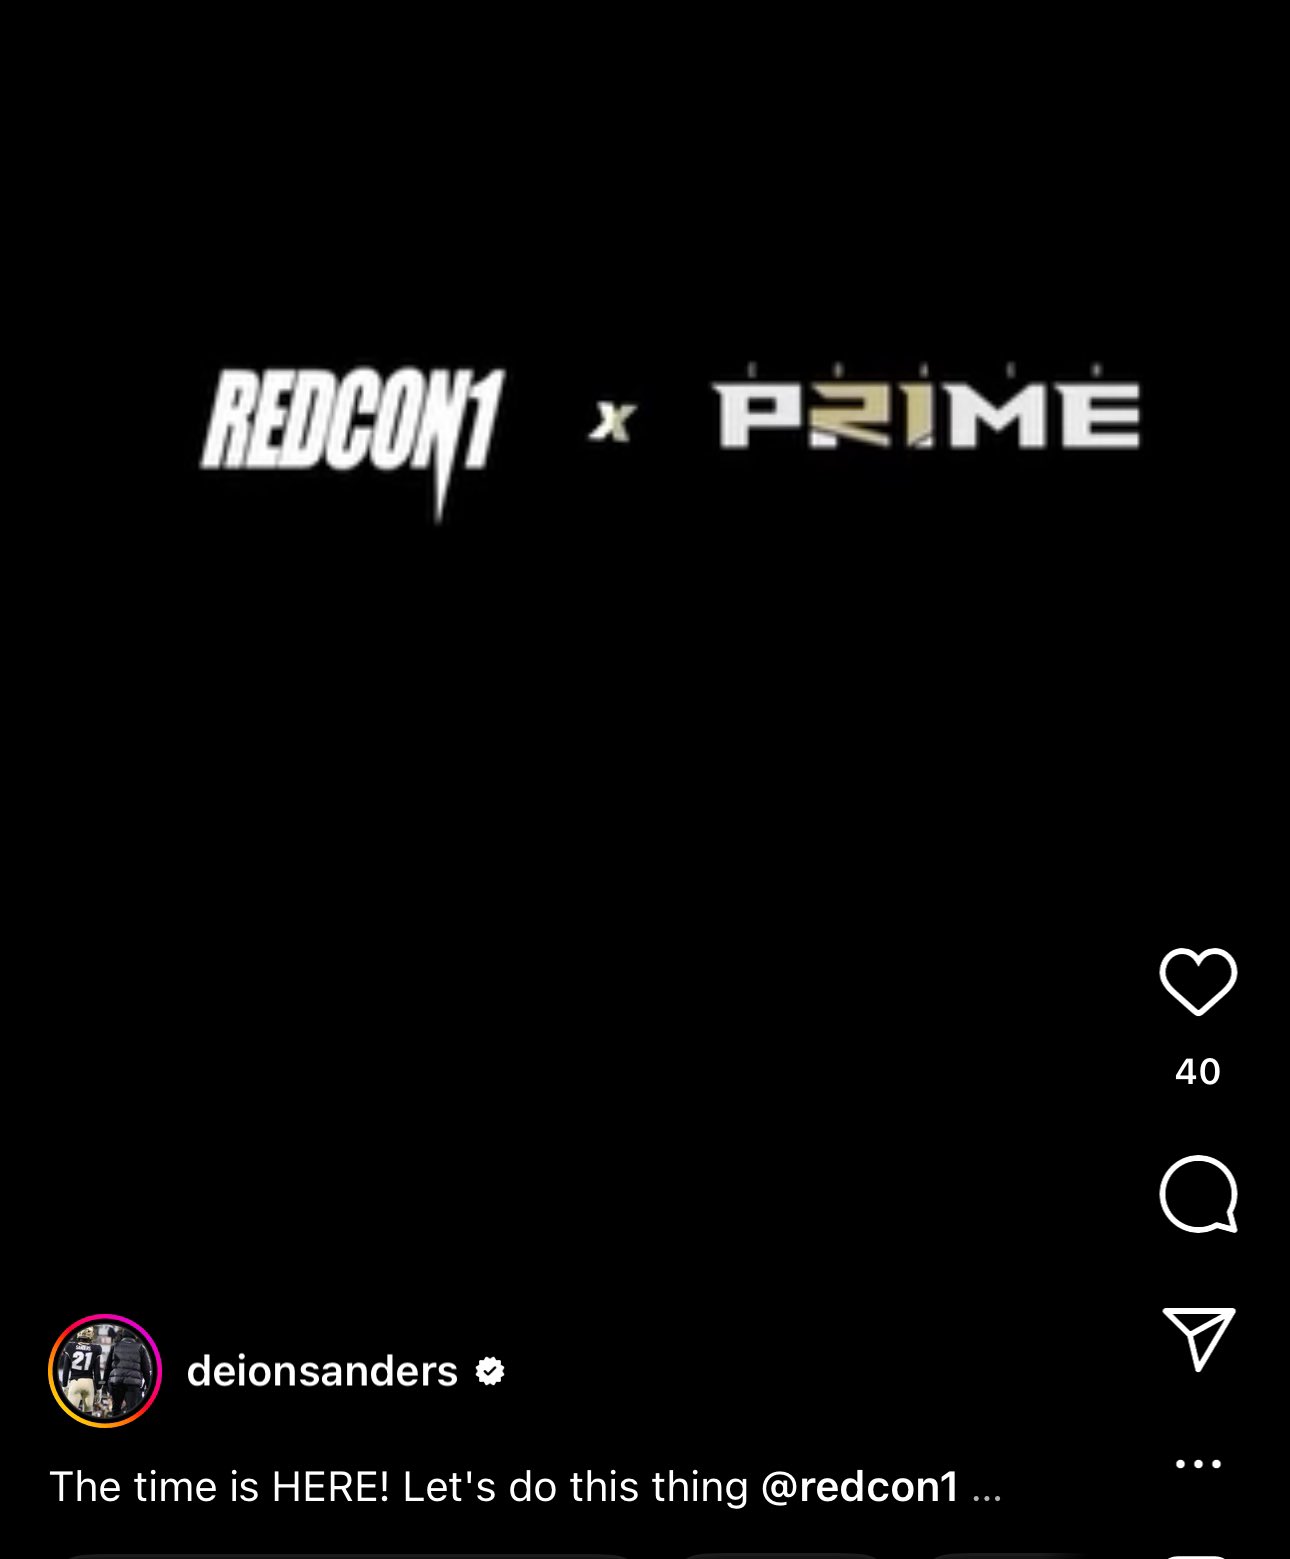 Deion Sanders announced a partnership with REDCON1